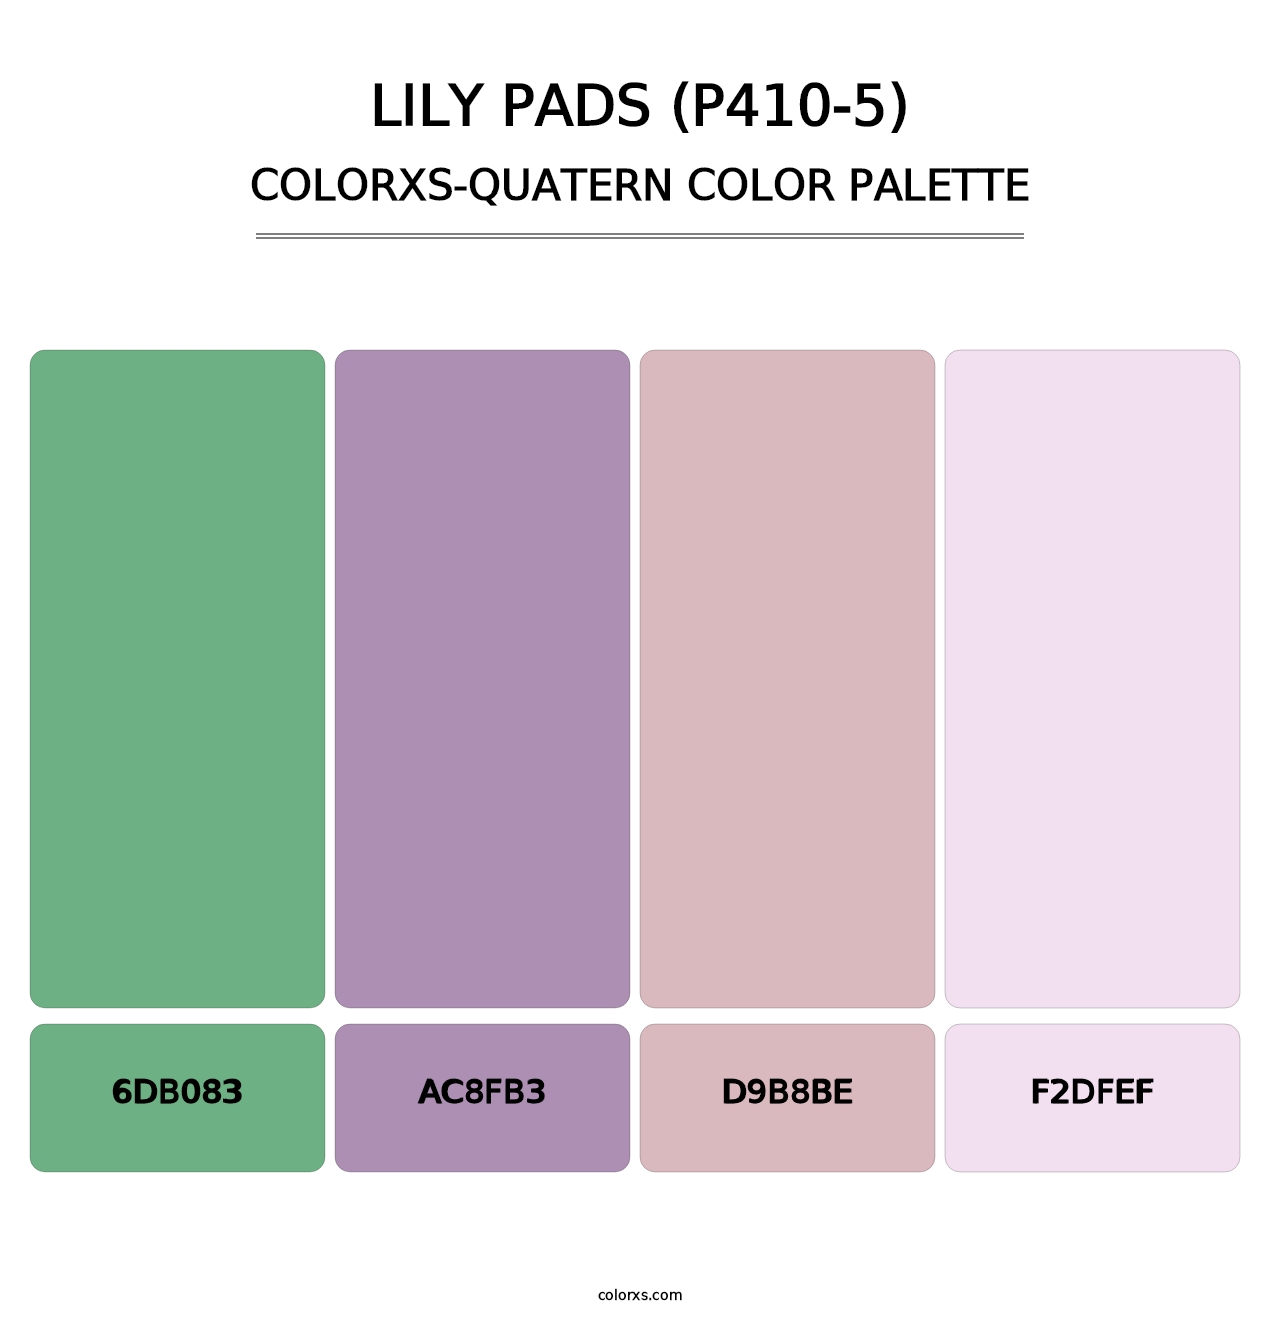 Lily Pads (P410-5) - Colorxs Quatern Palette